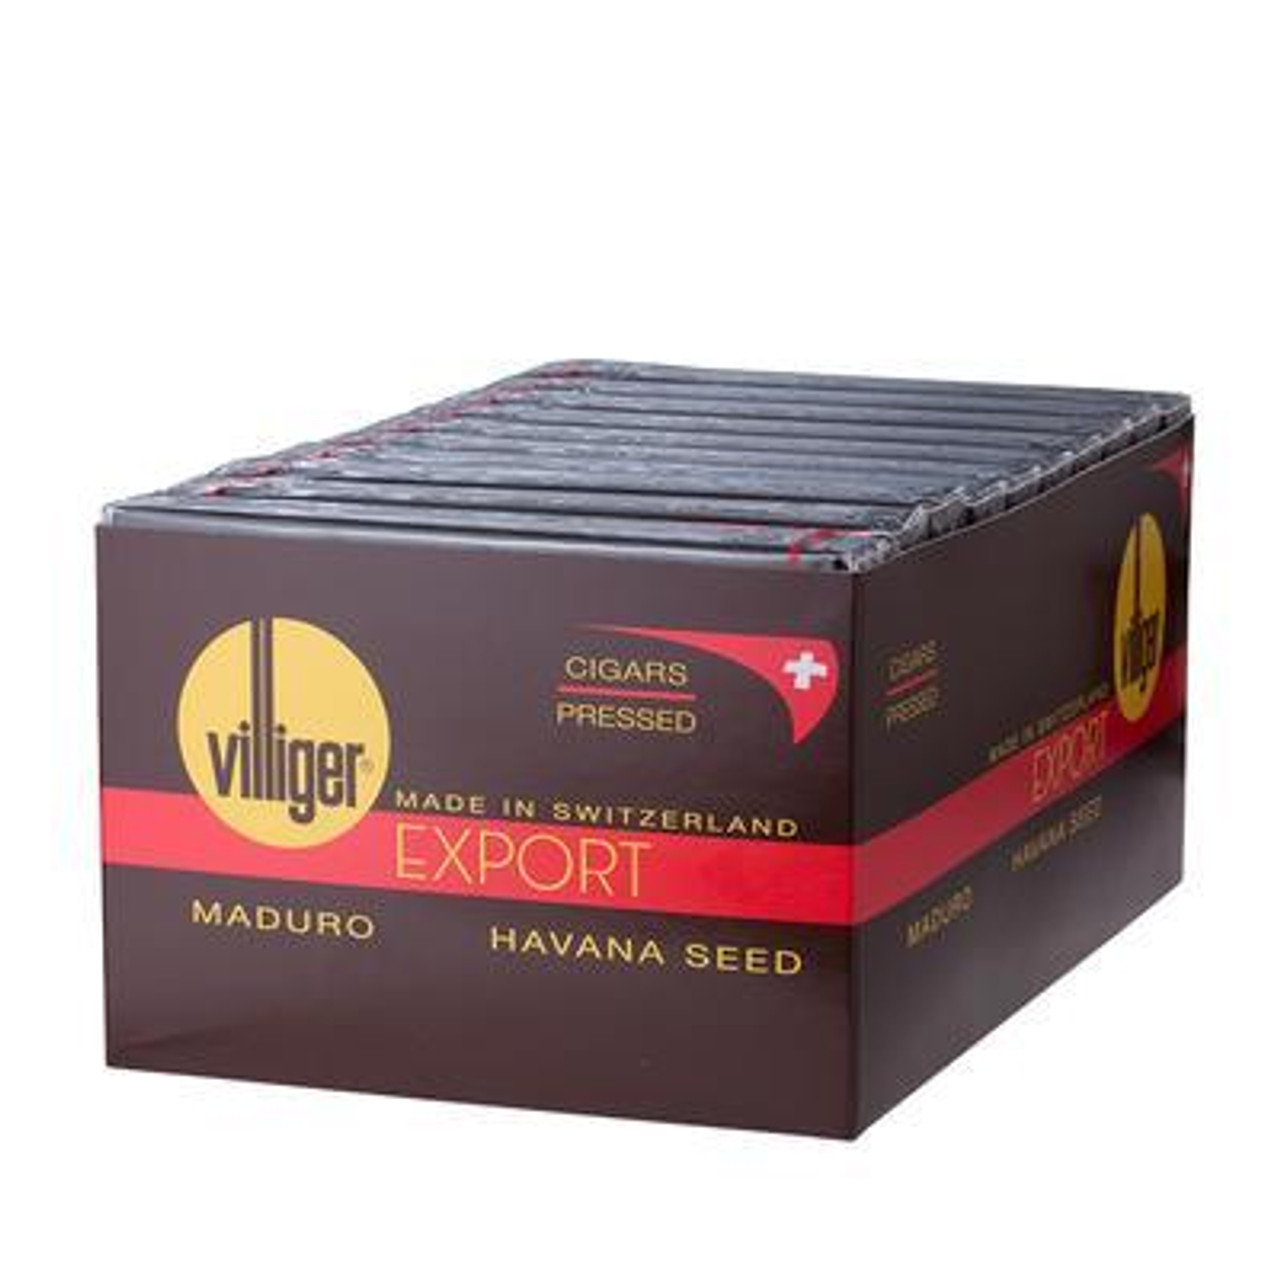 Villiger Export Maduro Cigars - 4 x 37 (10 Packs of 5) *Box